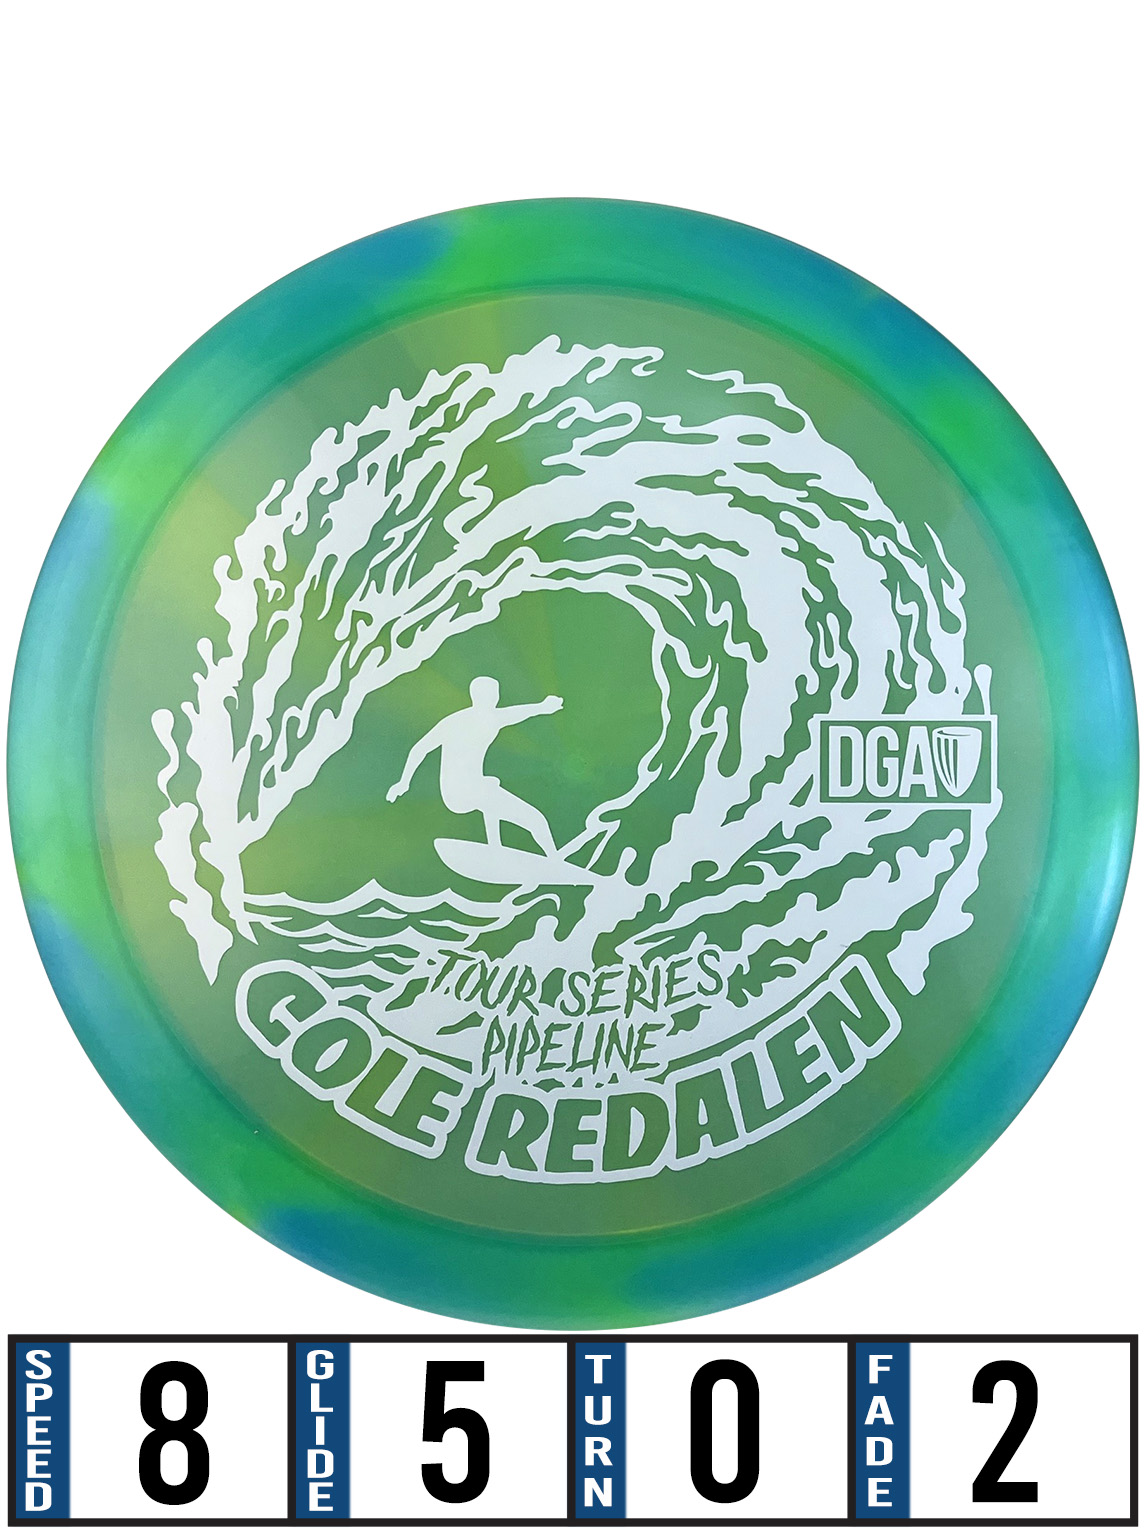 2023 Cole Redalen Tour Series Pipeline - blue-green